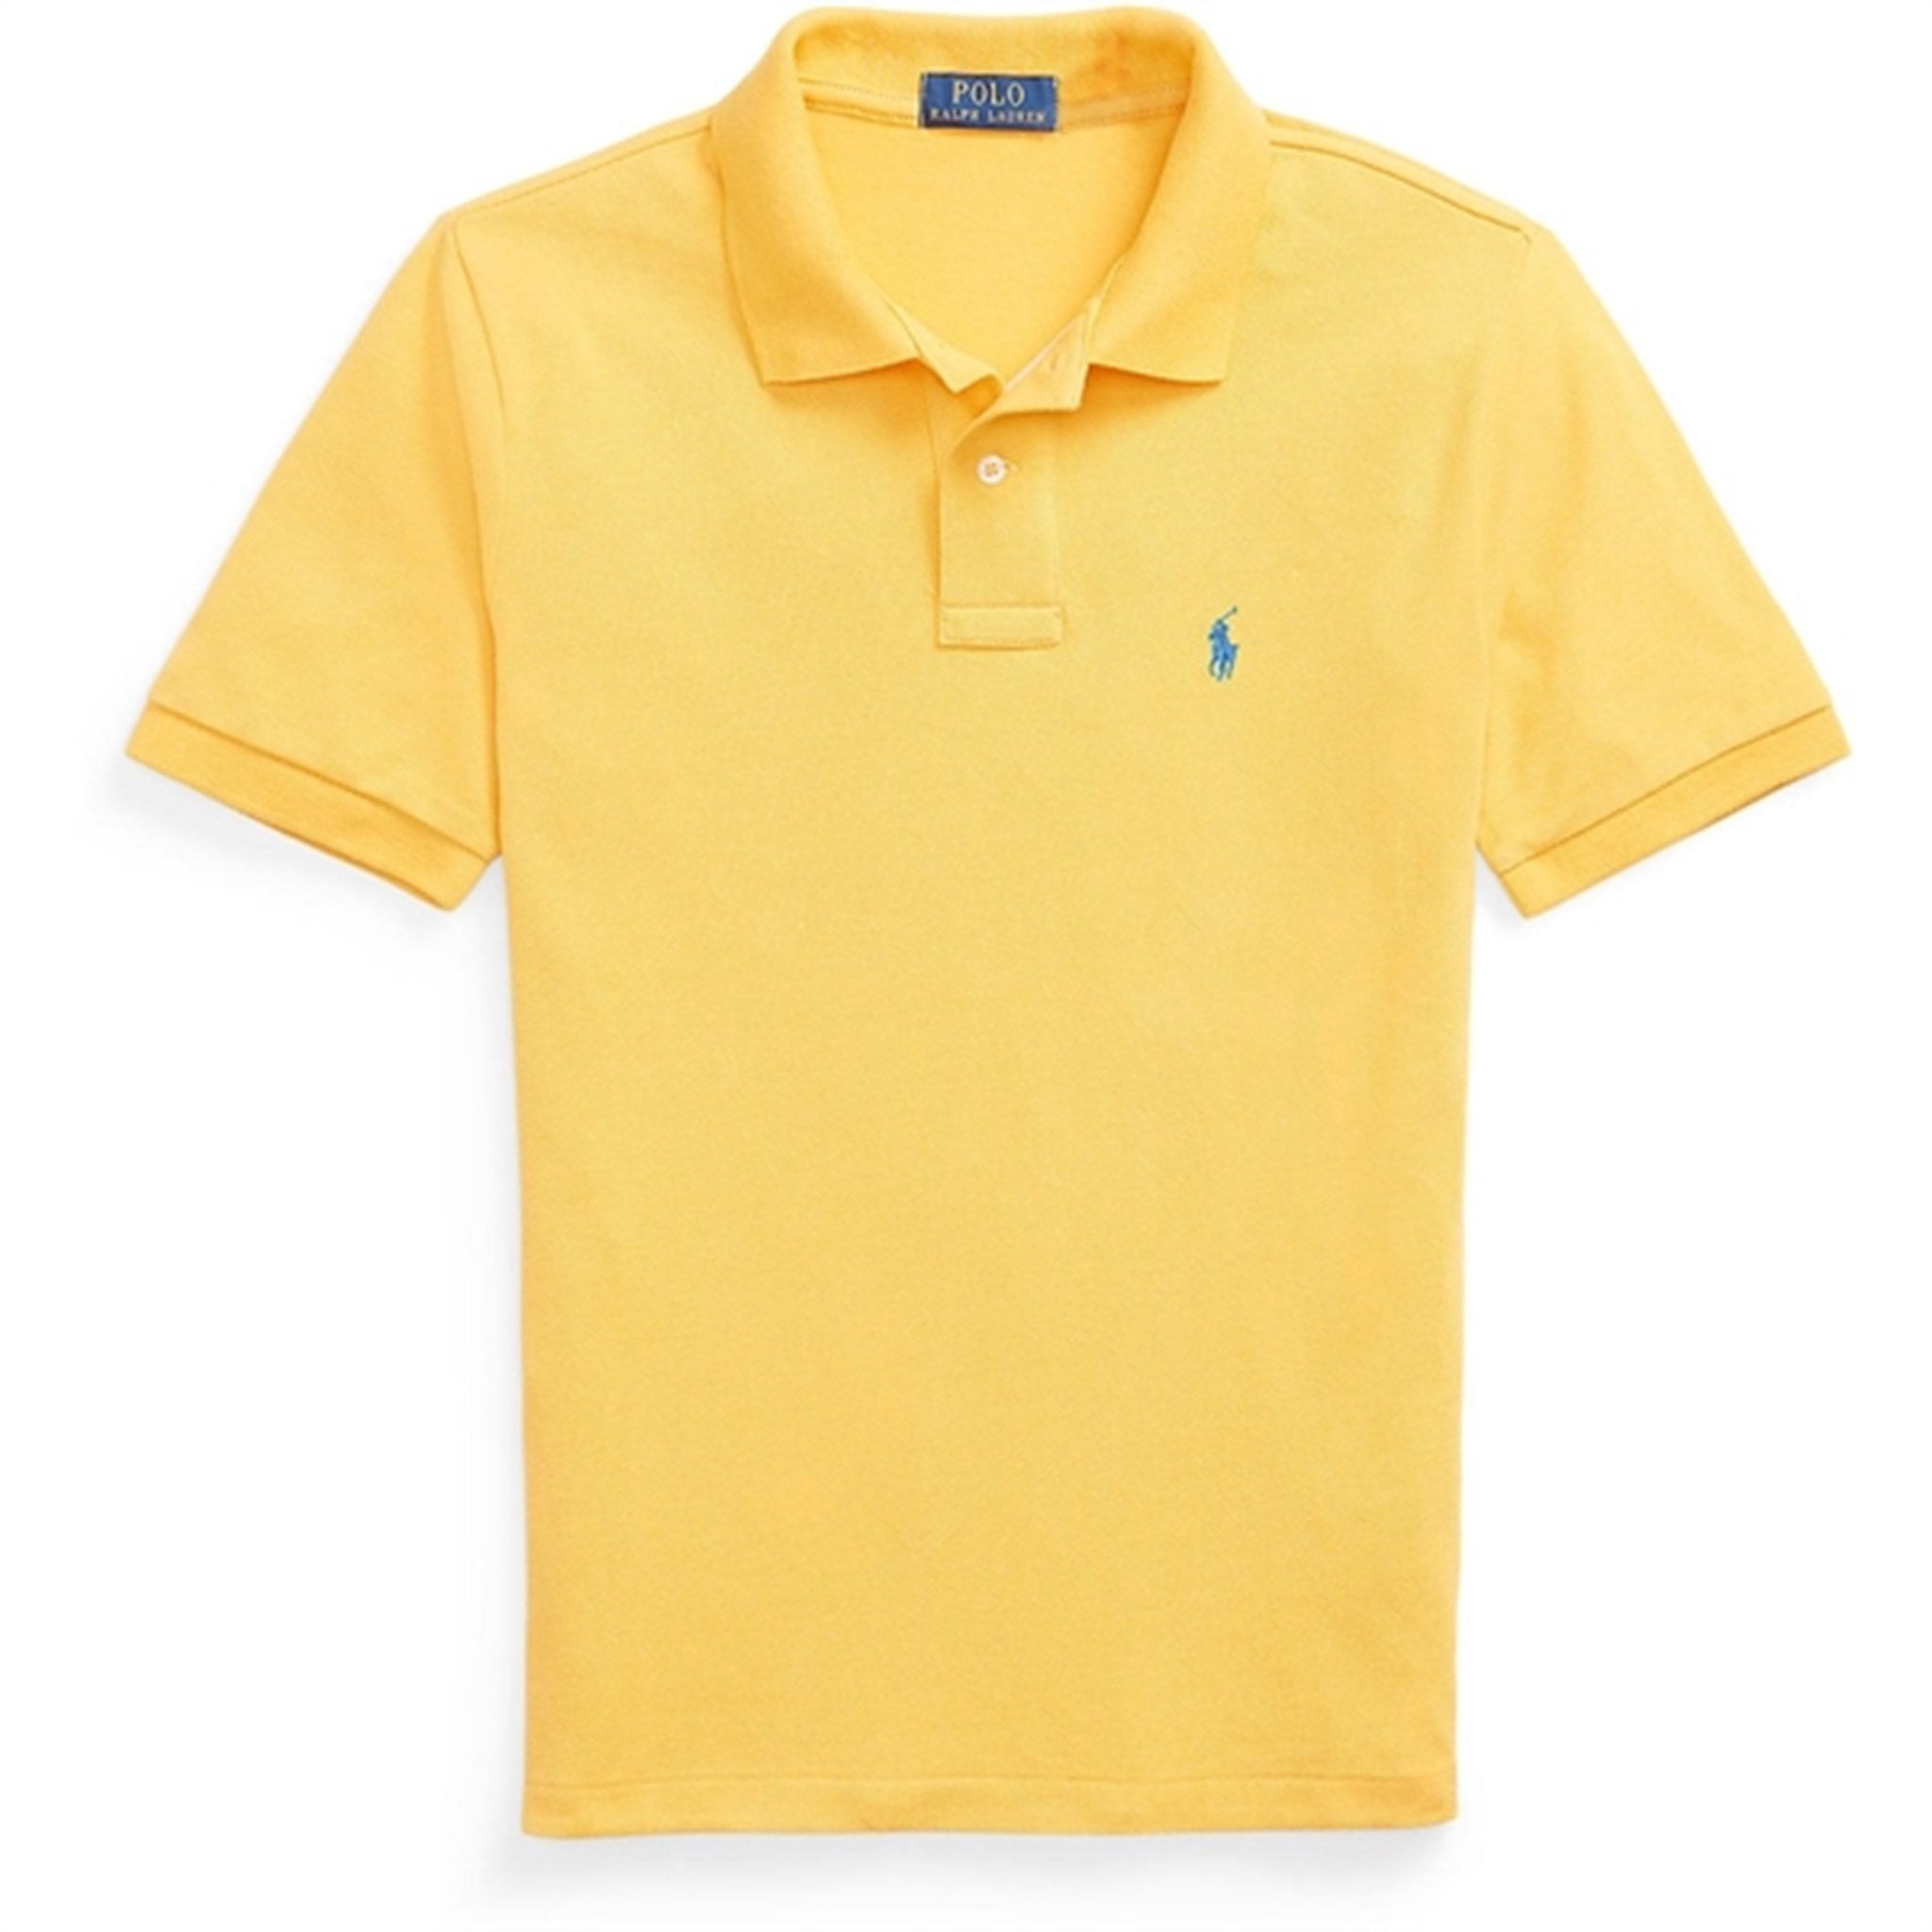 Polo Ralph Lauren Boys Polo Shirt Chrome Yellow